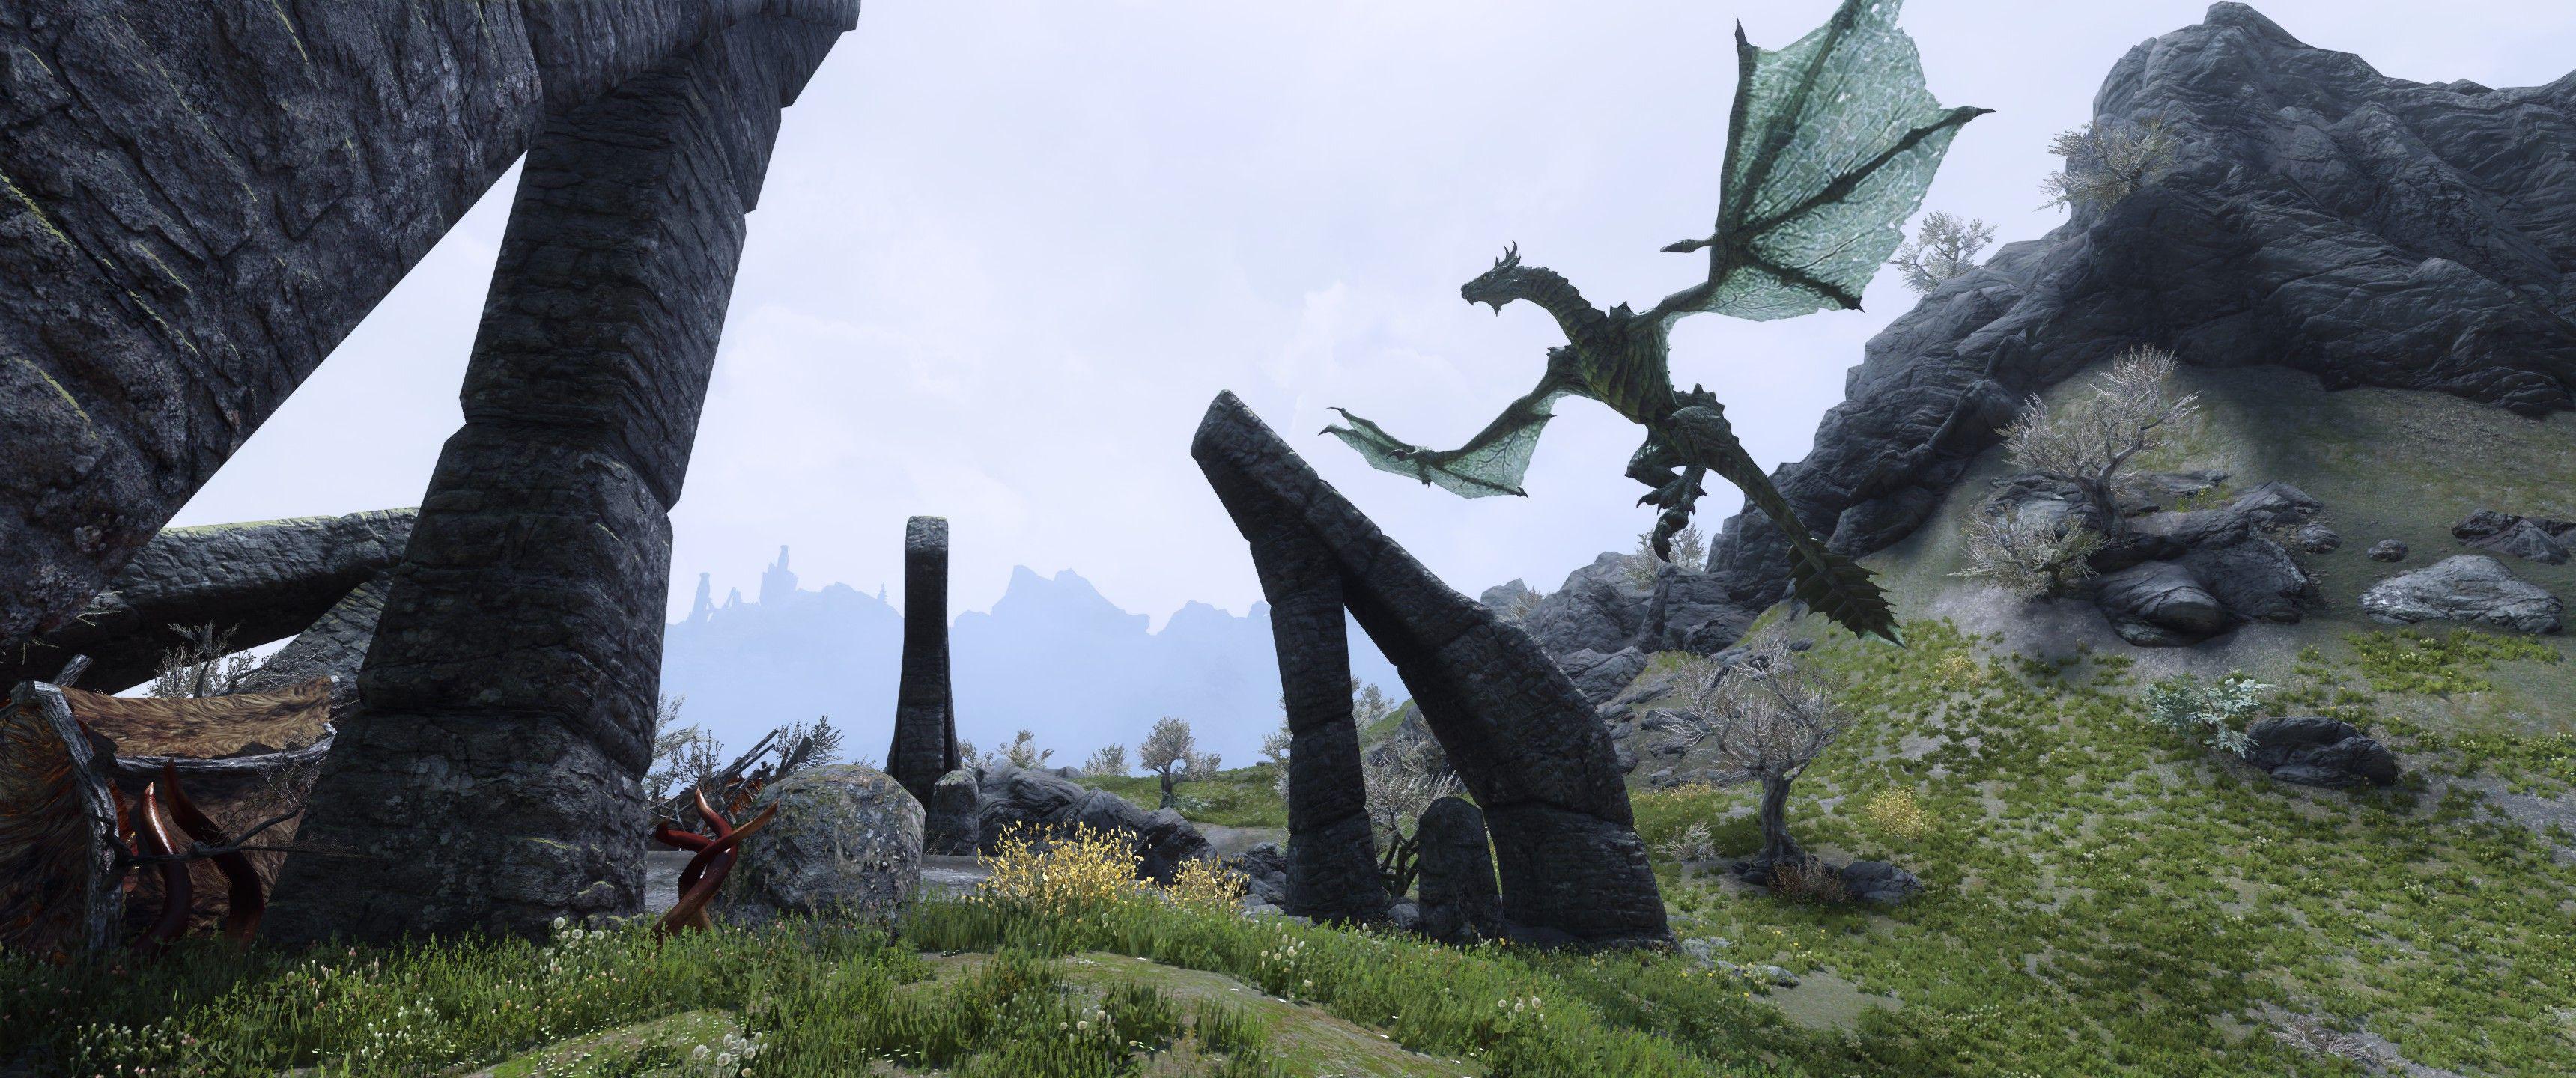 Mod de Skyrim revisa todos os Dragon Mounds